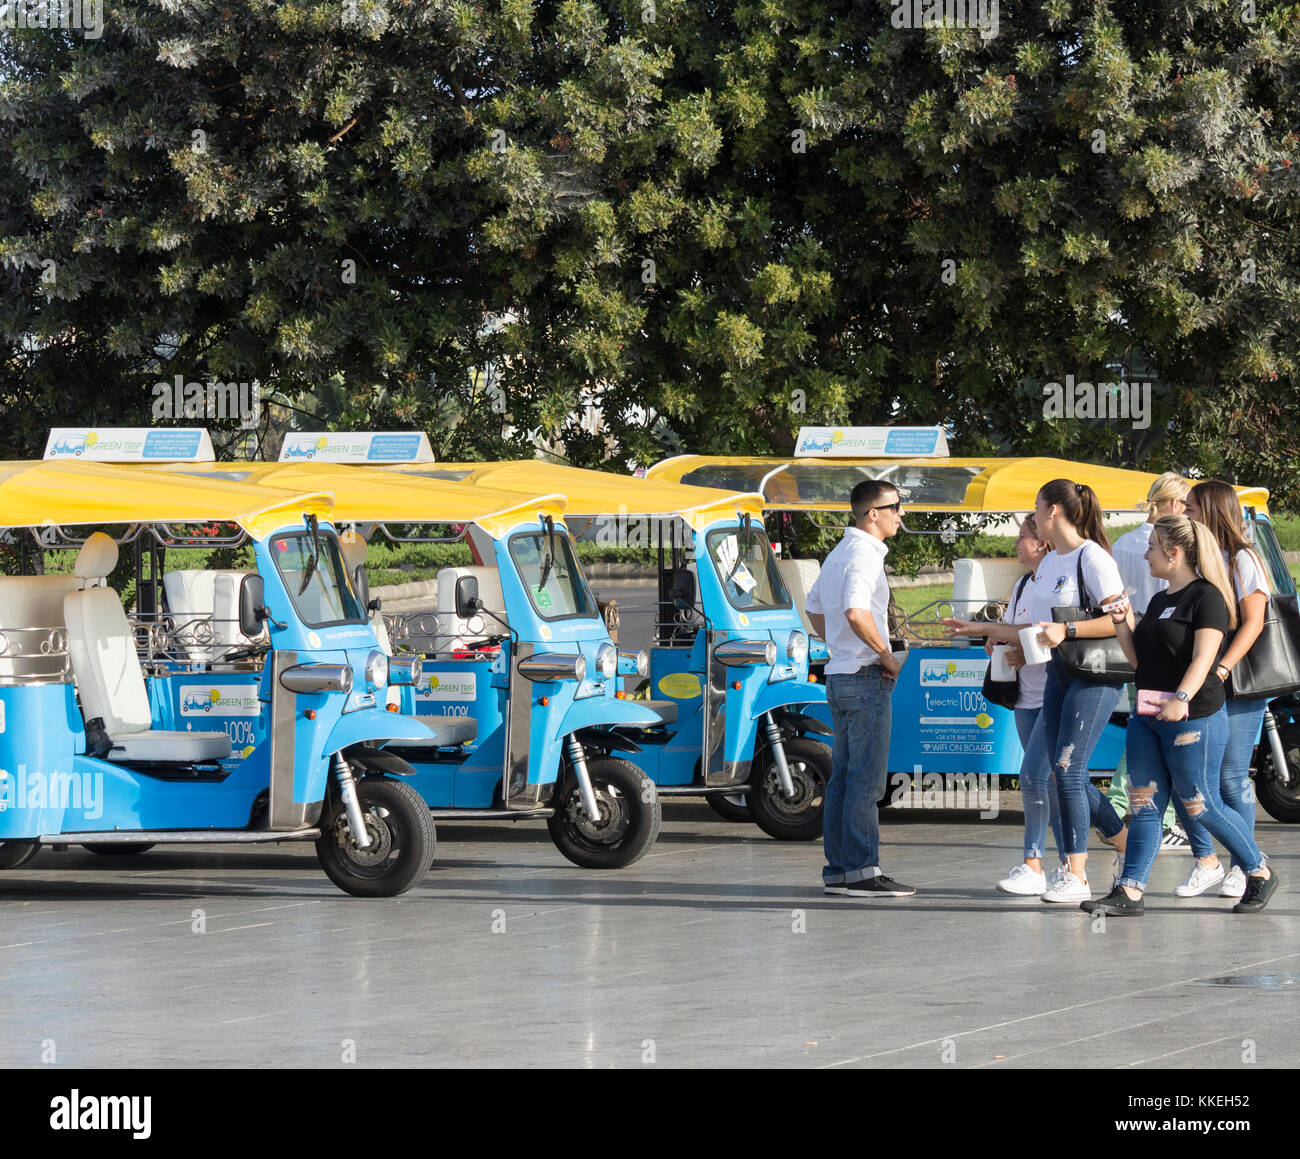 Electric, eco friendly Tuk Tuks offering city tours in Parque Santa Catalina, Las Palmas, Gran Canaria, Canary Islands, Spain Stock Photo